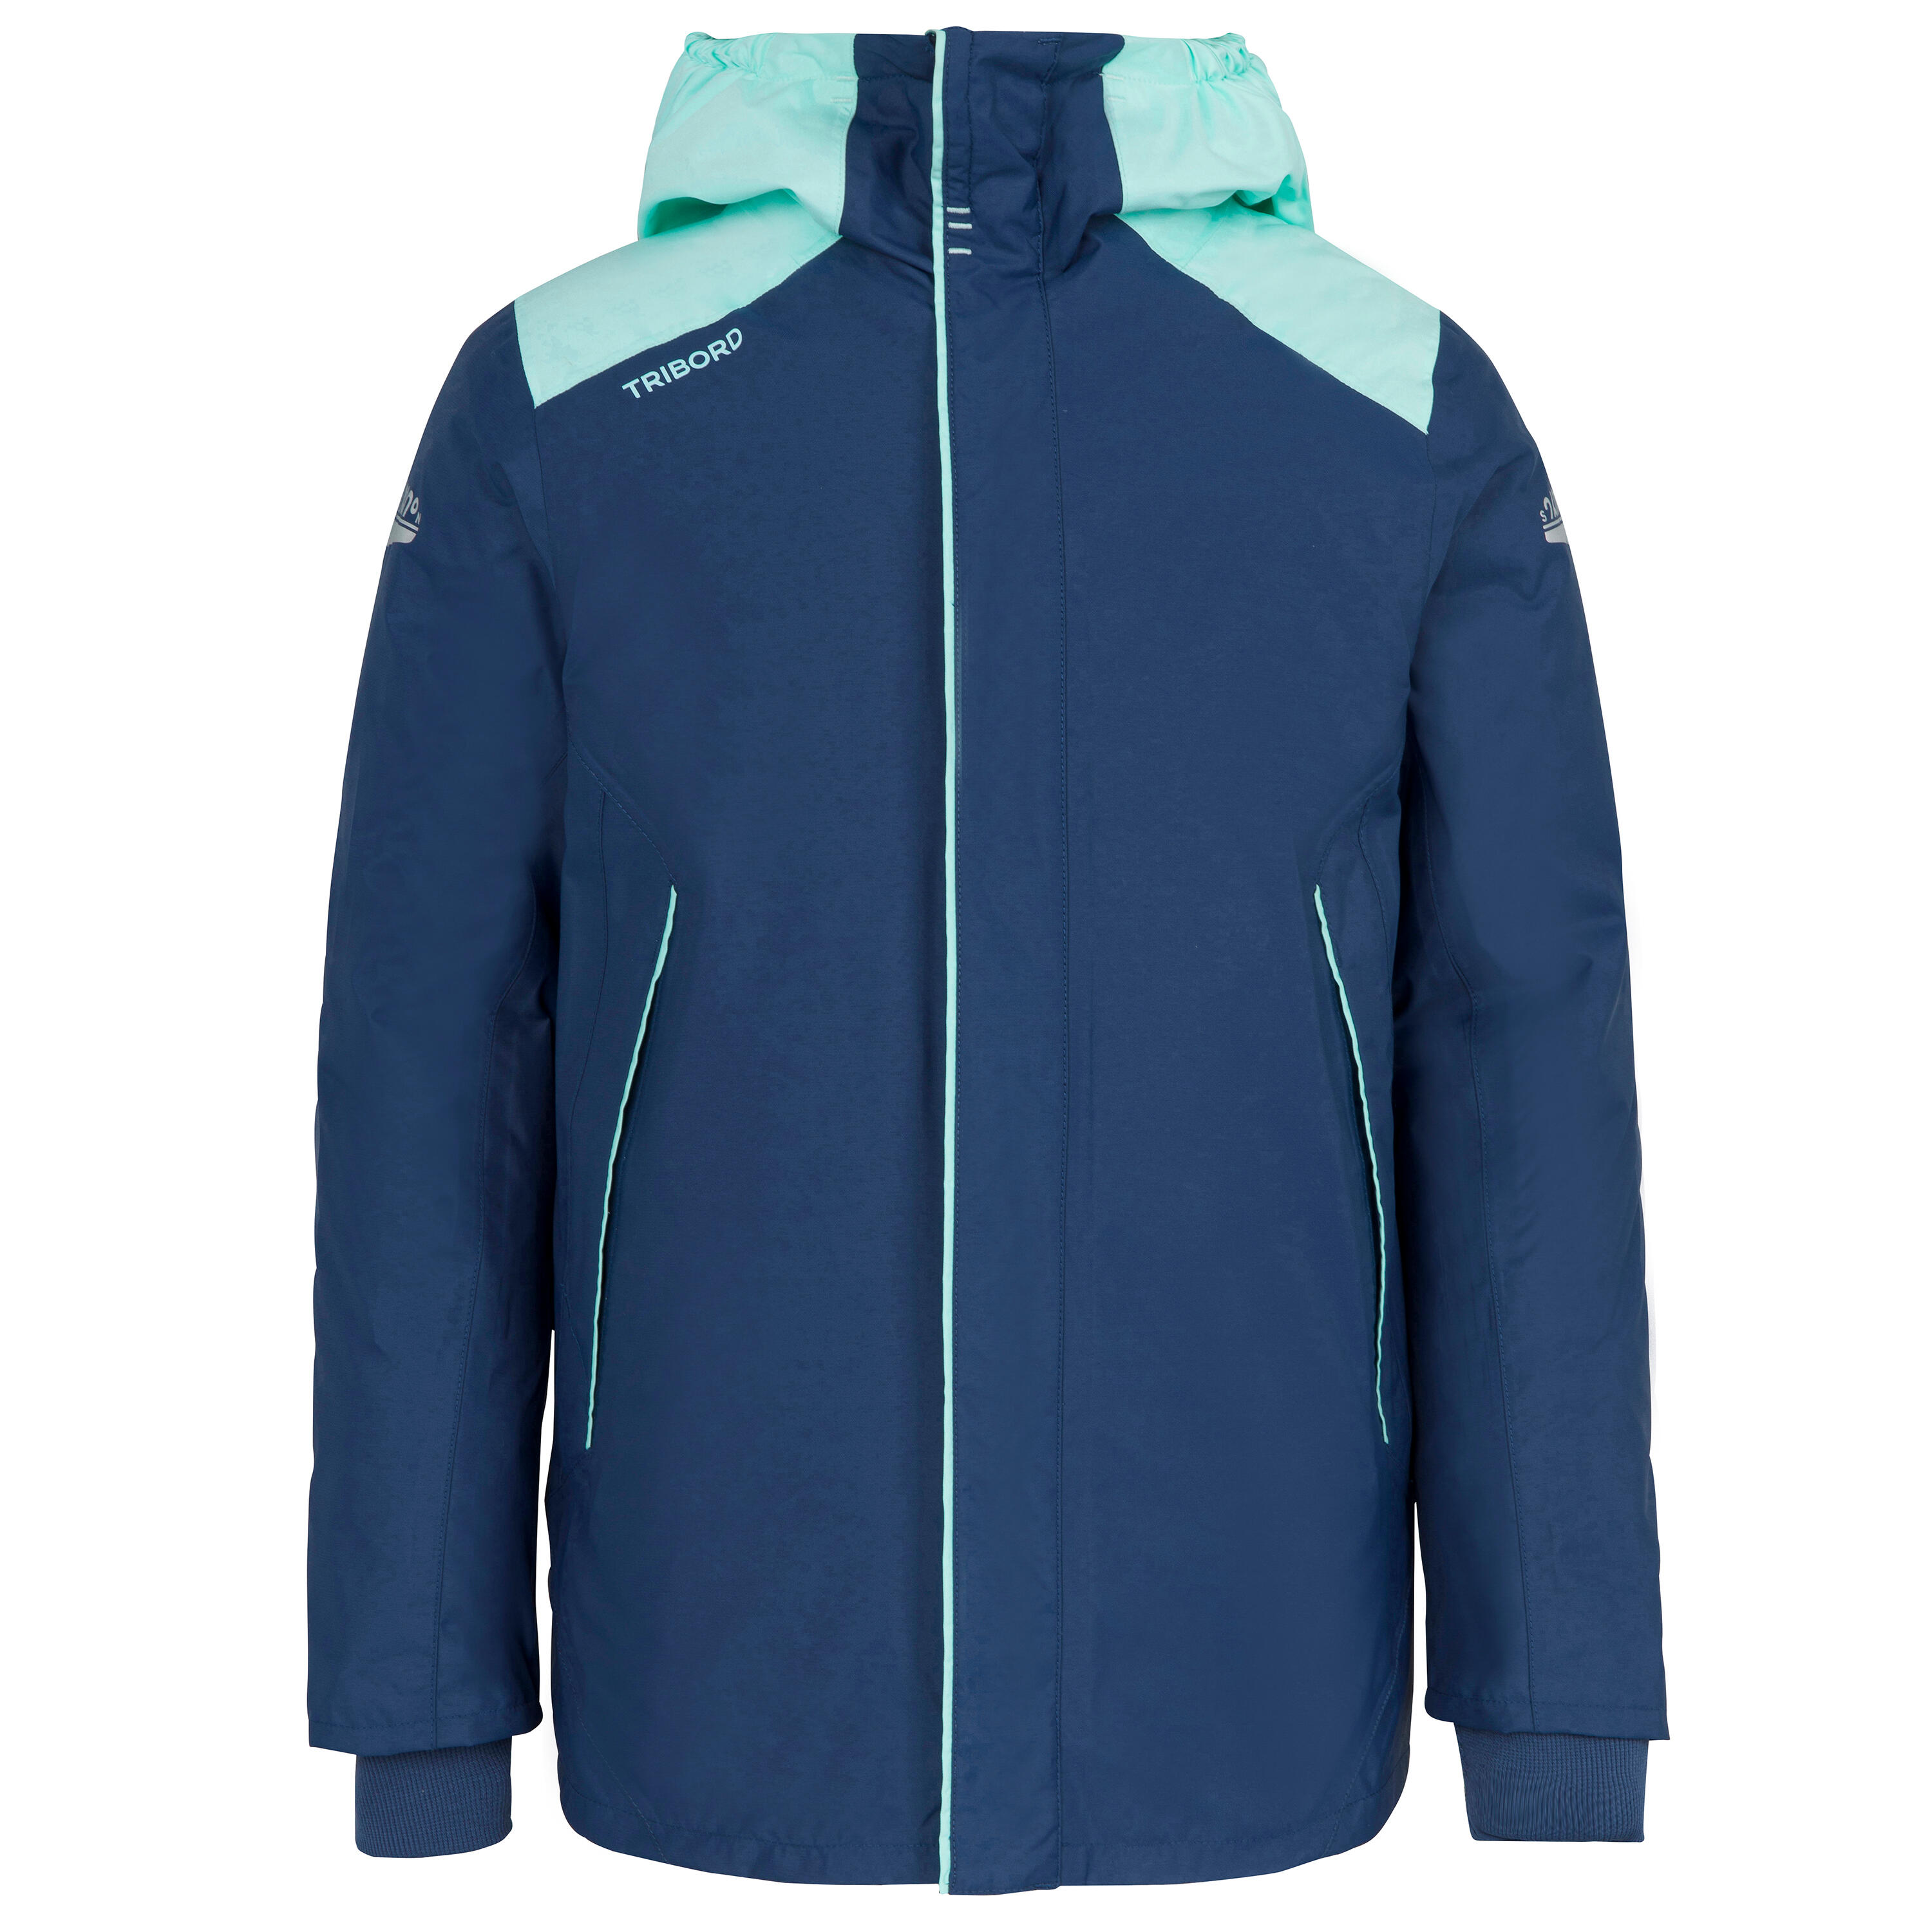 Kids sailing jacket warm and waterproof Sailing 100 blue mint 3/12